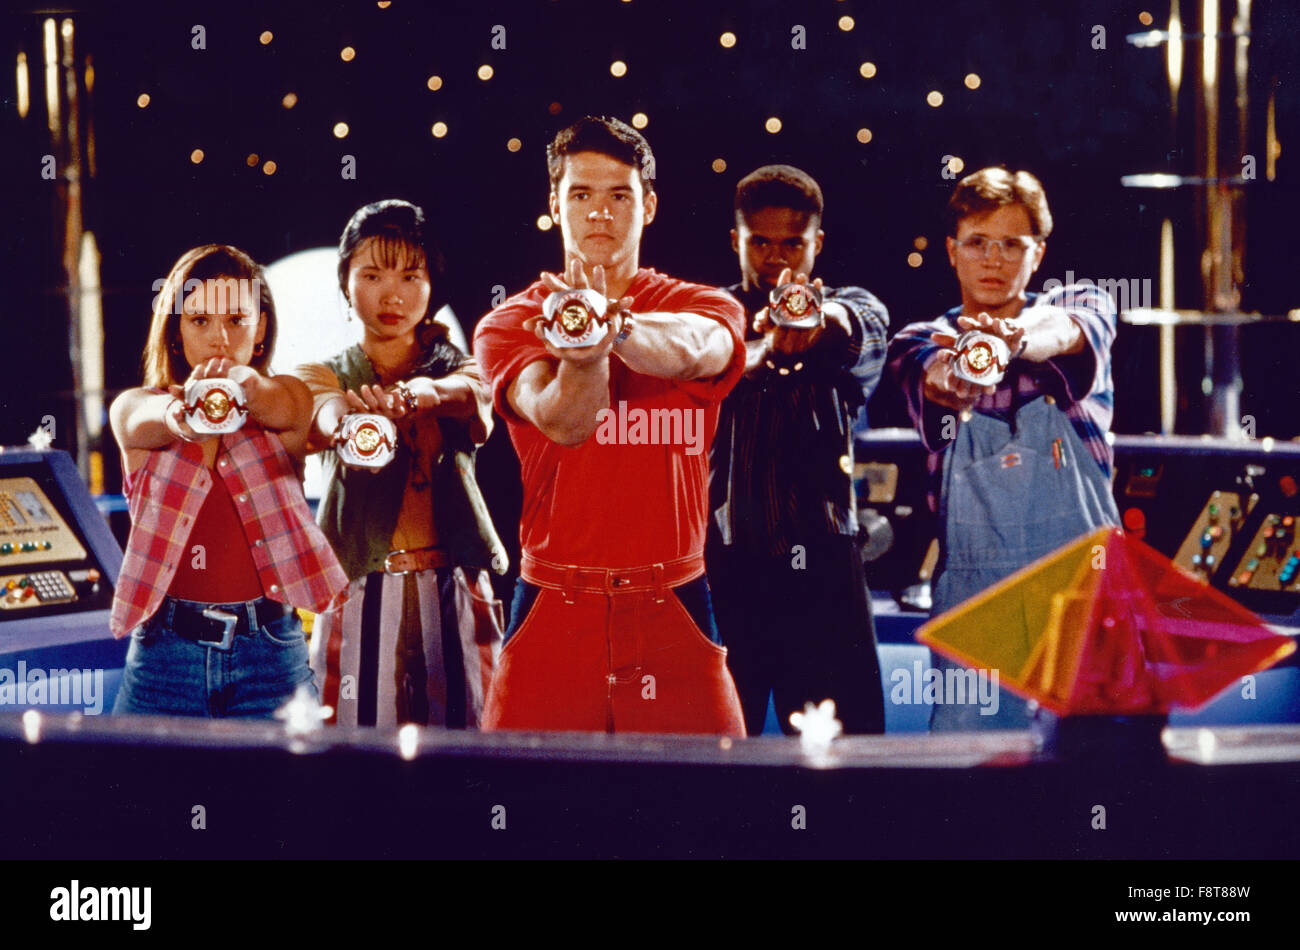 Mighty Morphin Power Rangers, Actionserie, USA 1993-1996, Darsteller: Walter Jones, Amy Jo Johnson, Austin St. John, Thuy Trang, David Yost. Stock Photo